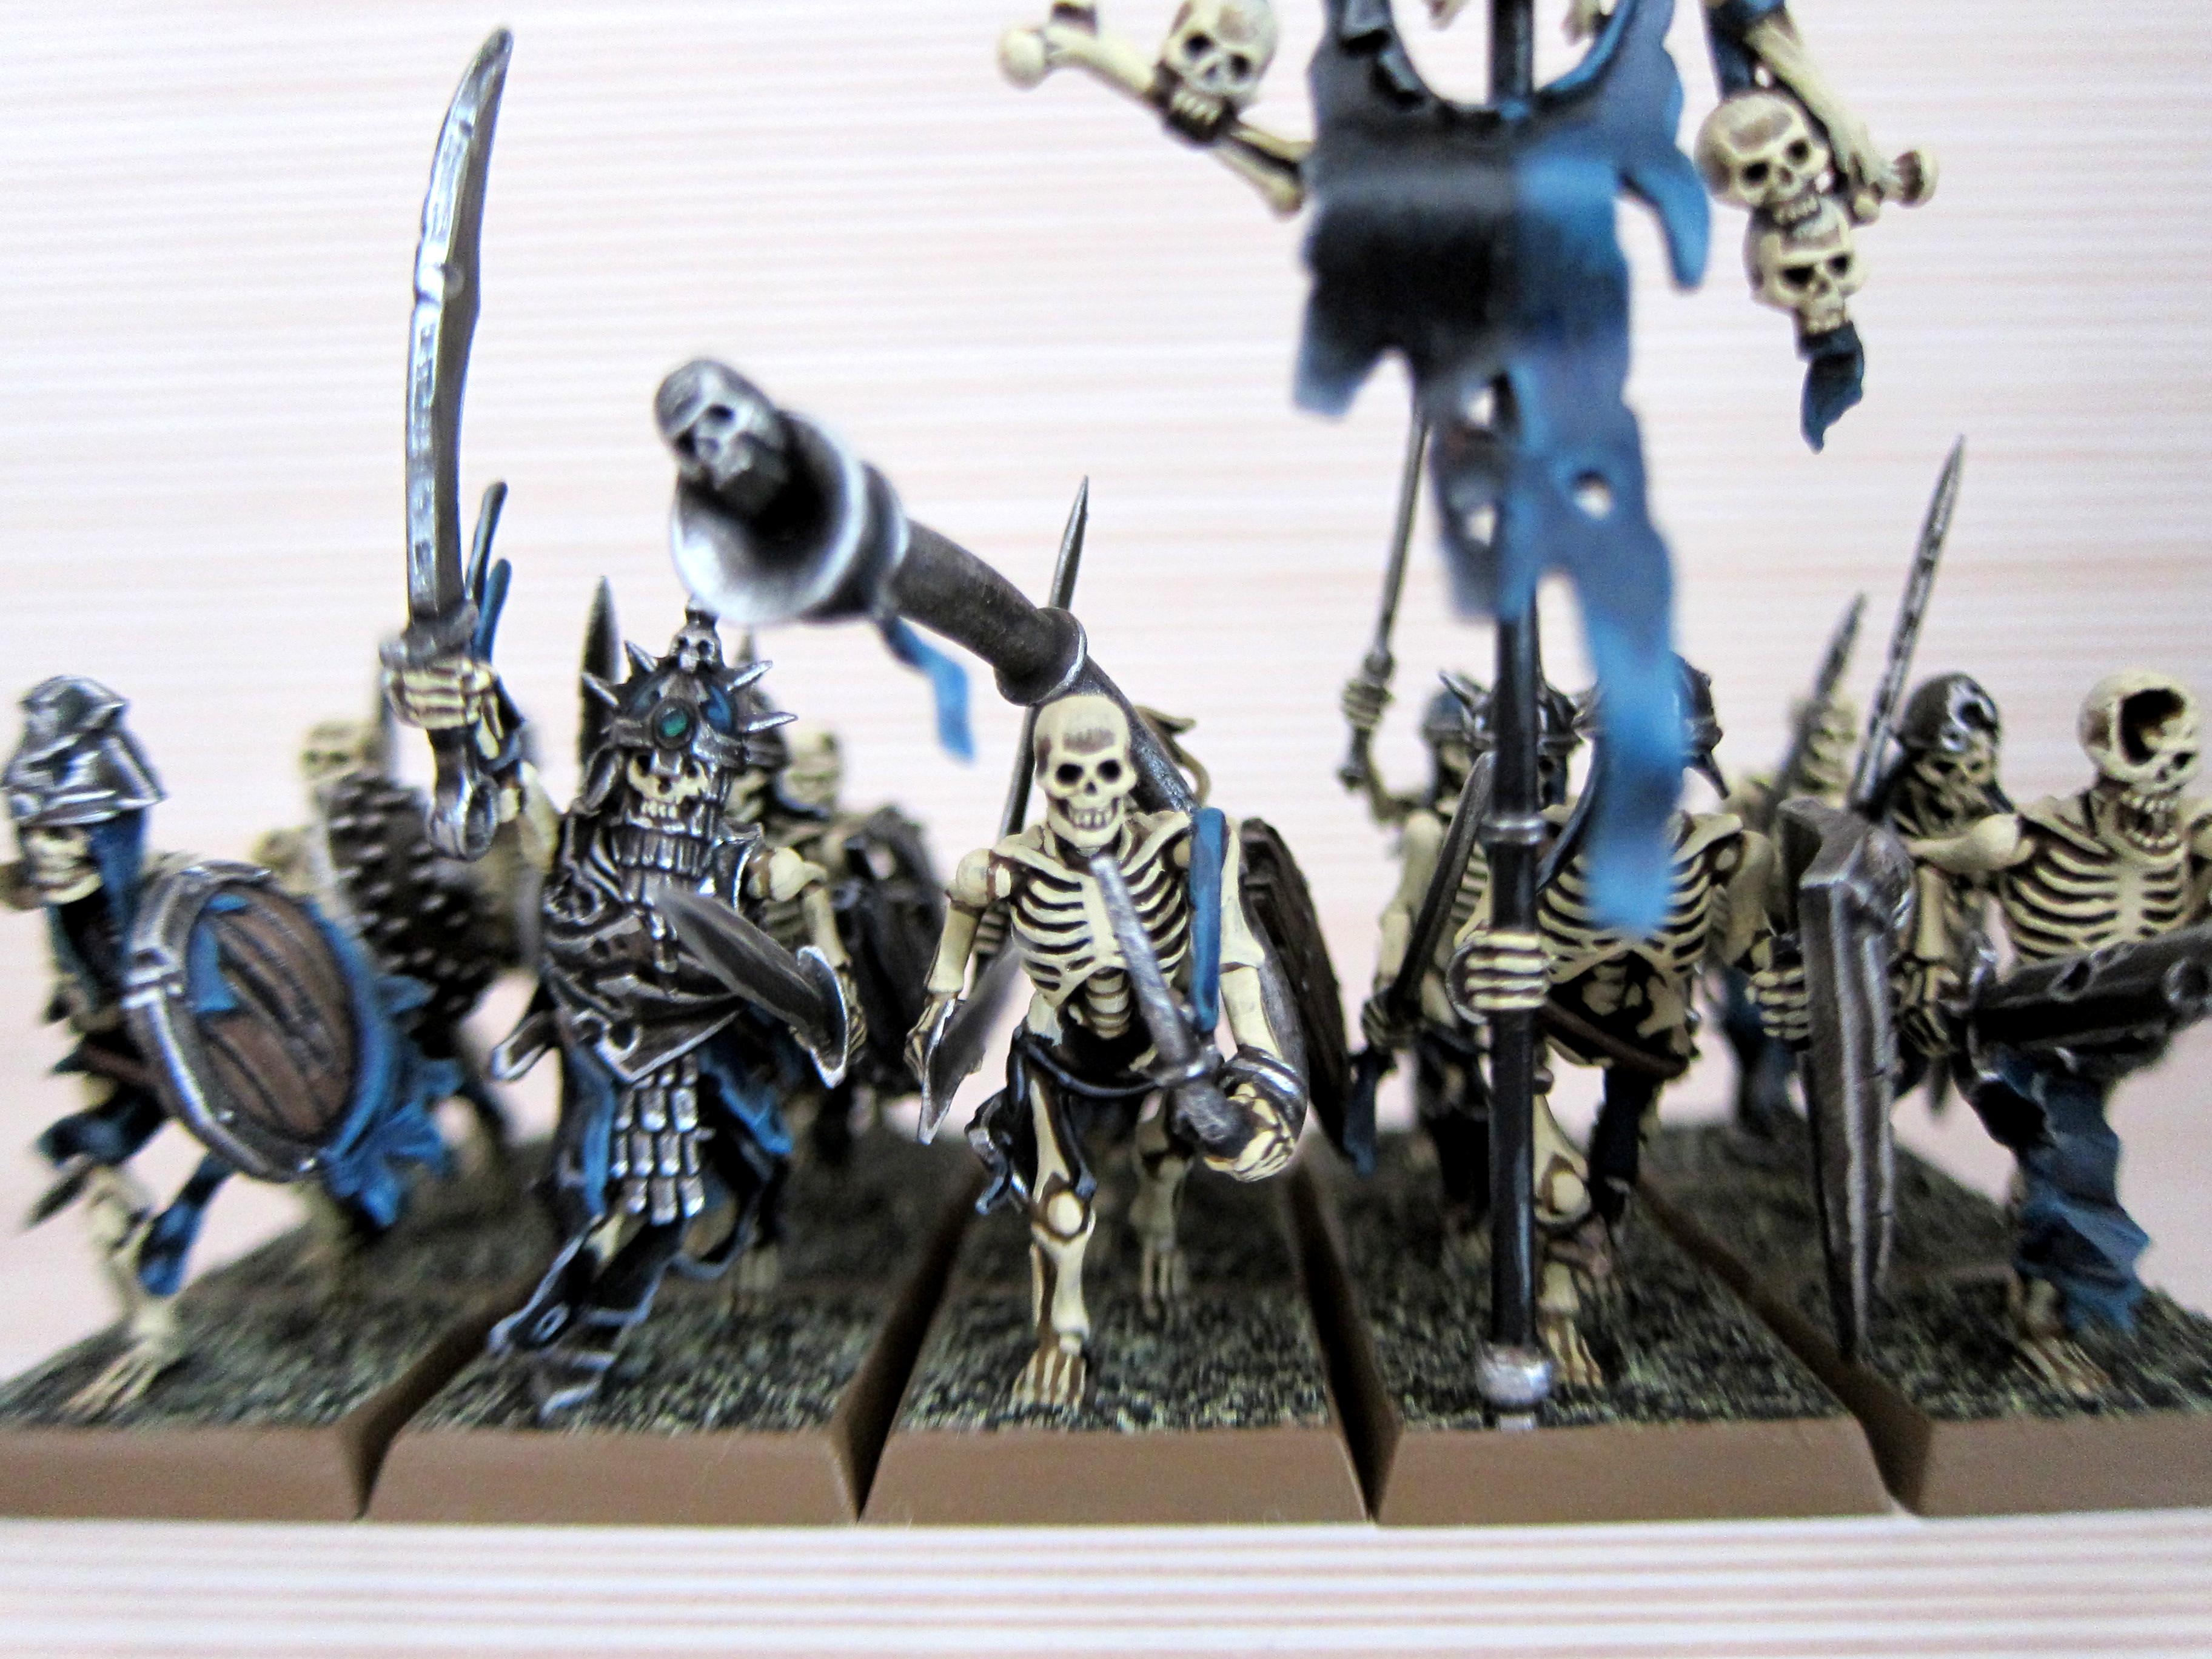 S, Skeleton Warrior, Skeleton Warriors, Skeletons, Undead, Vampire Counts, Warhammer Fantasy, Wfb